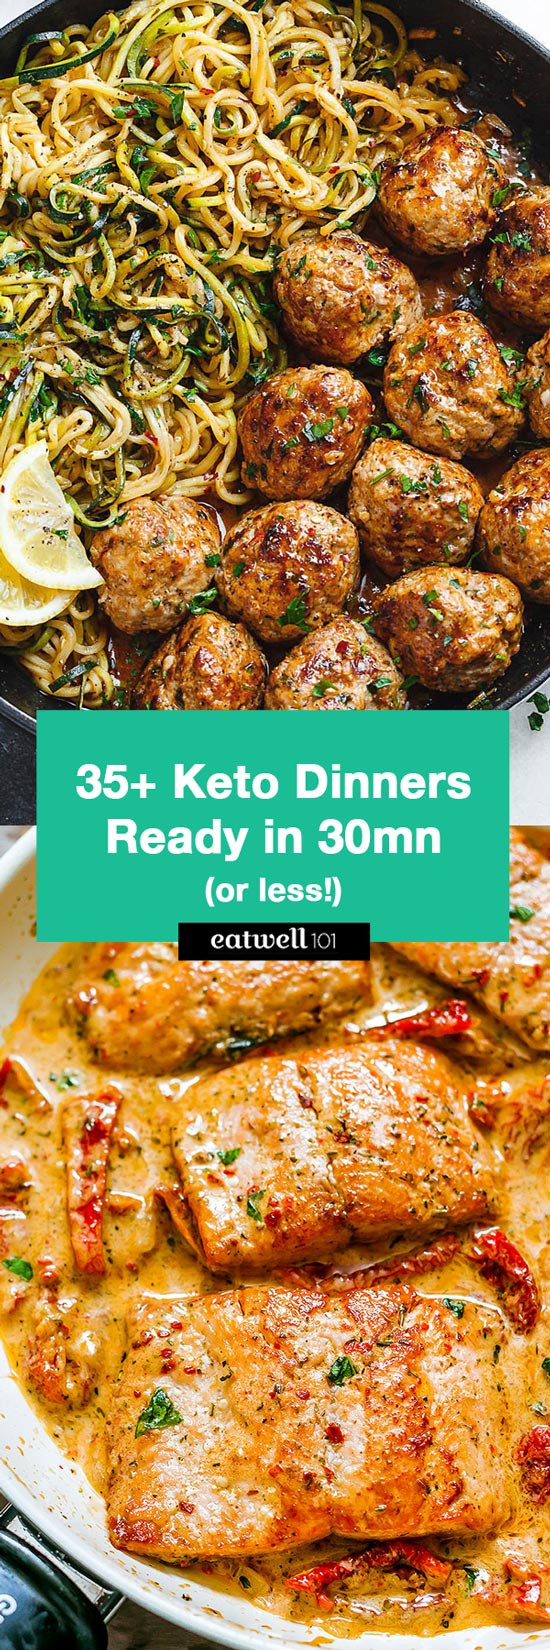 Quick Keto Dinner
 Quick Keto Dinner Recipes 60 Low Carb Keto Dinner You